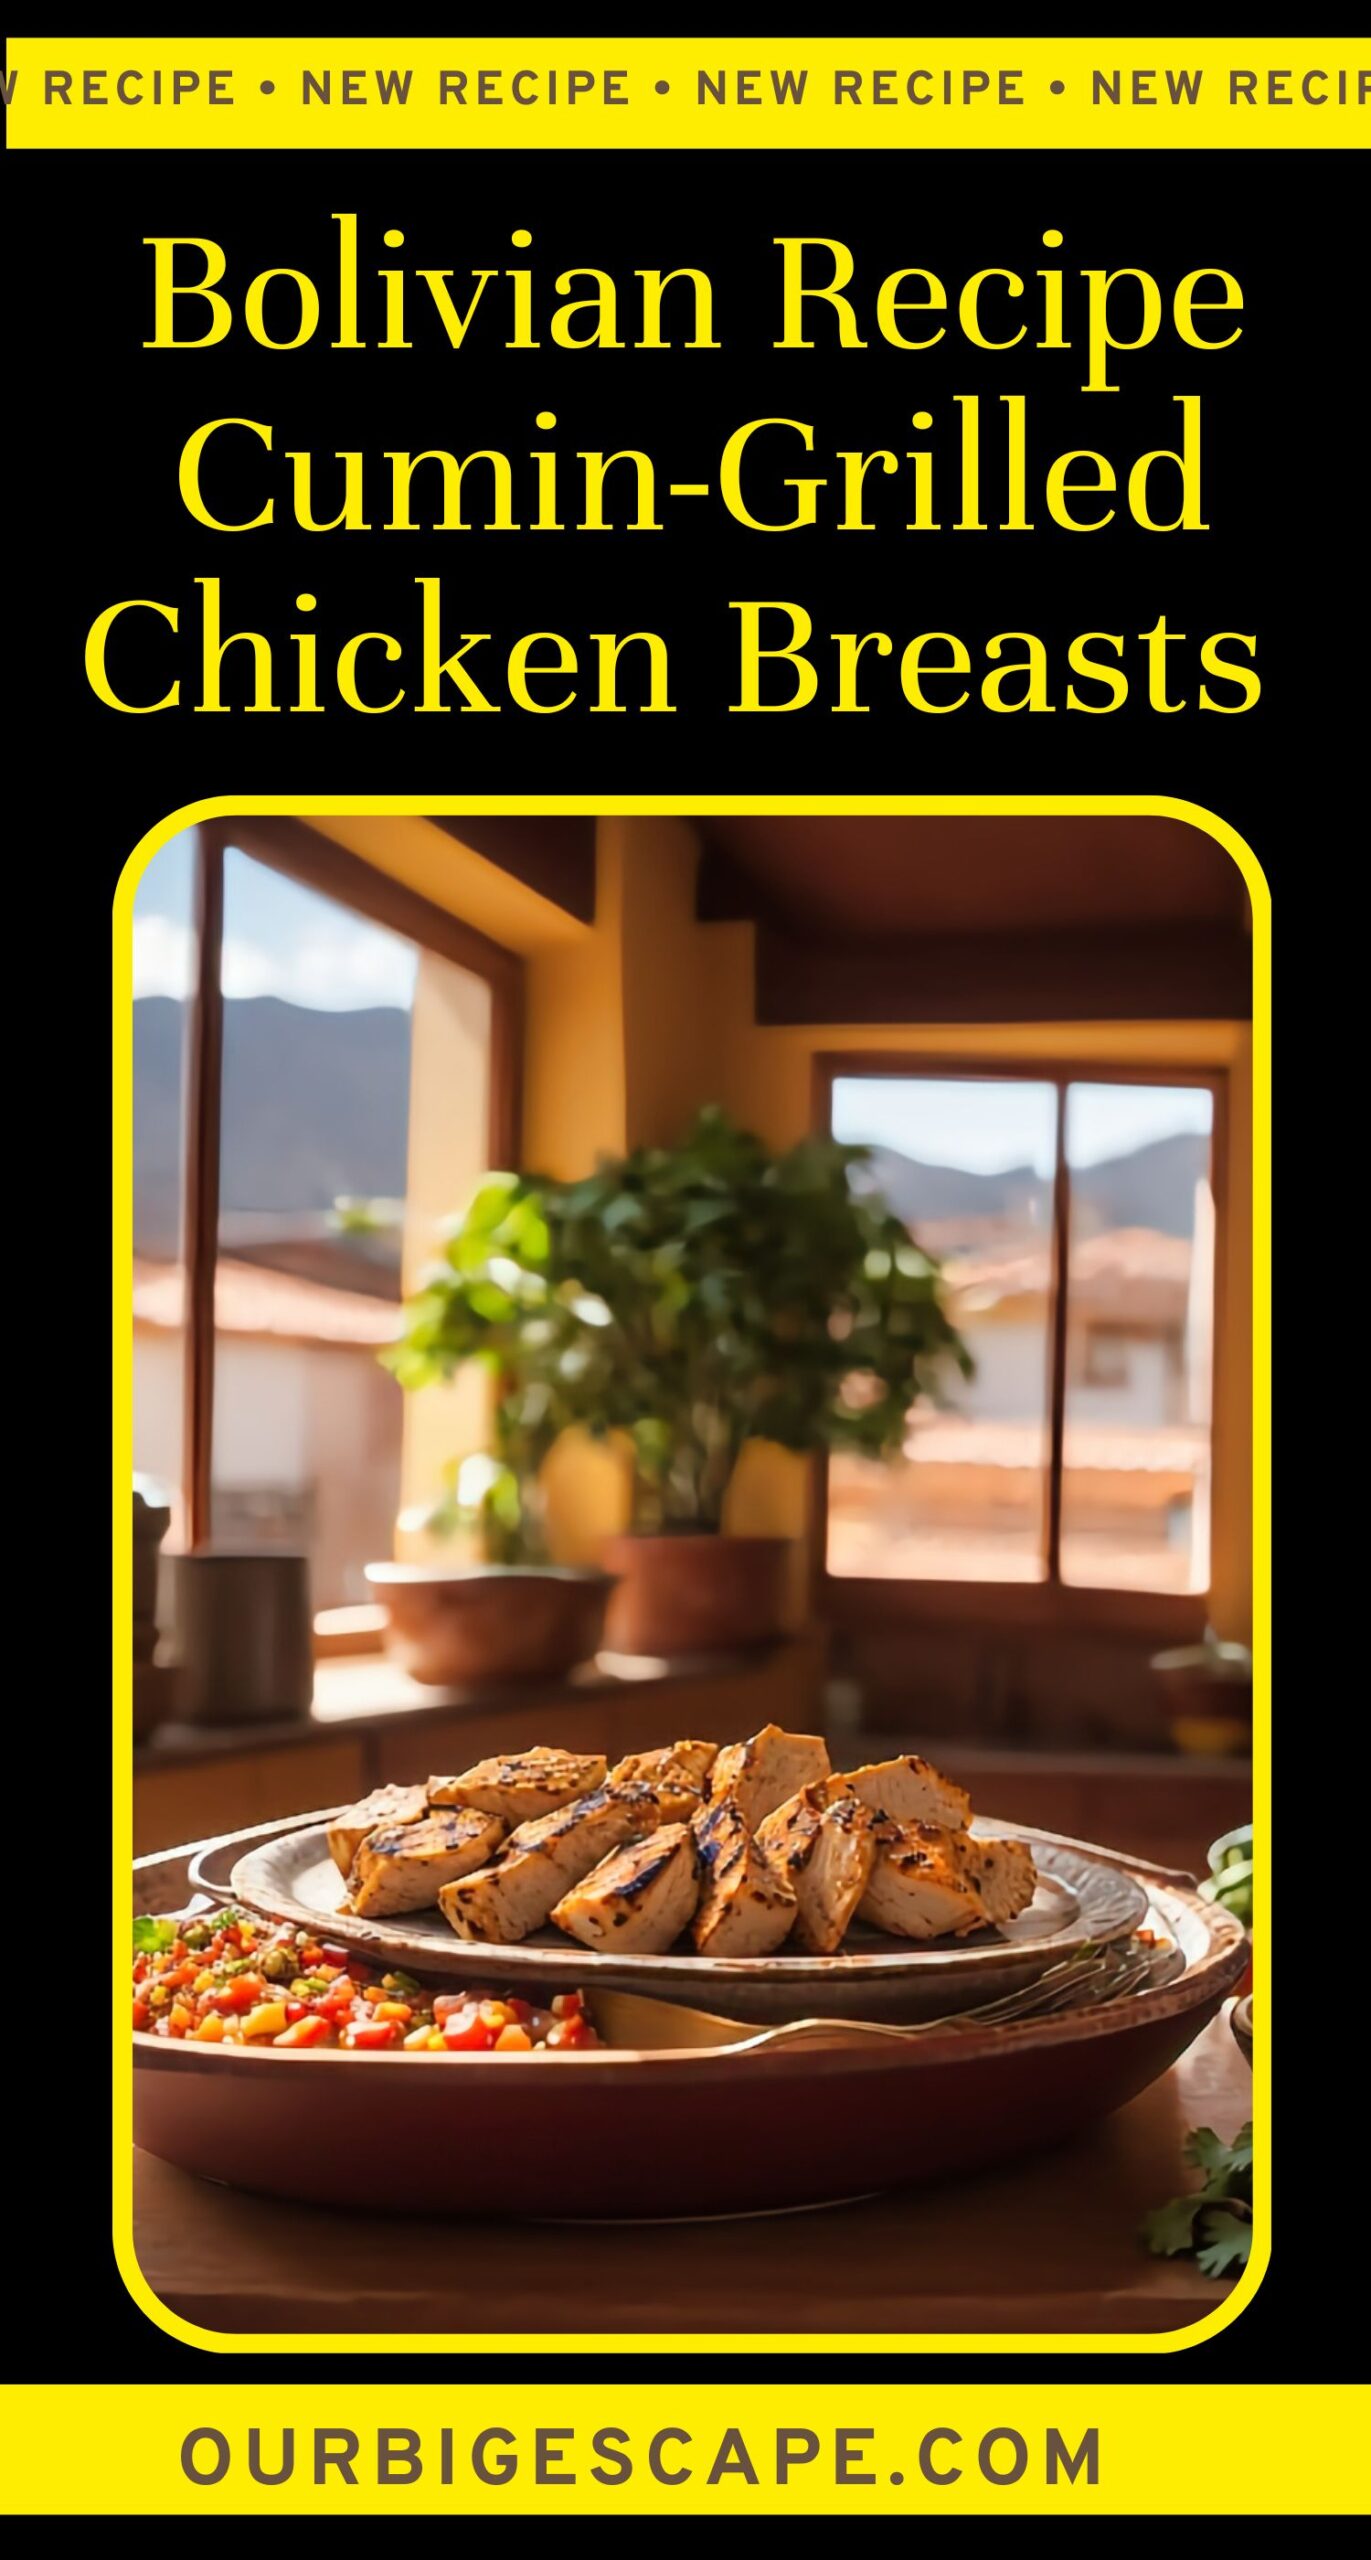 3. Cumin-Grilled Chicken Breasts Recipe